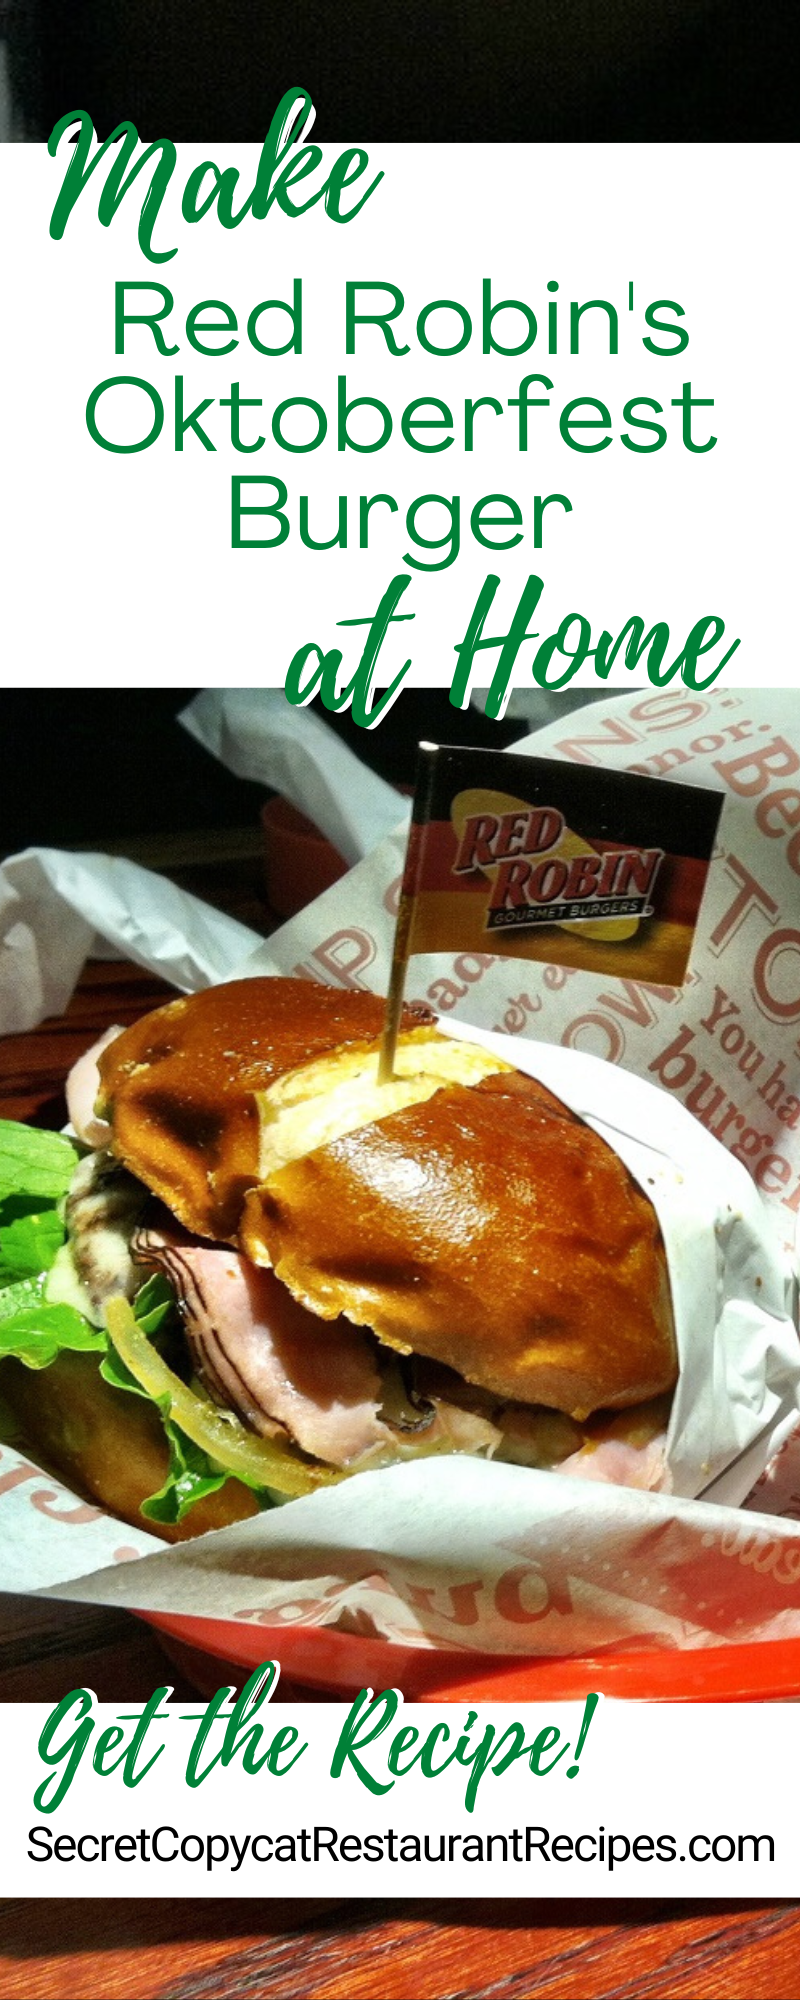 Red Robin Oktoberfest Burger Recipe